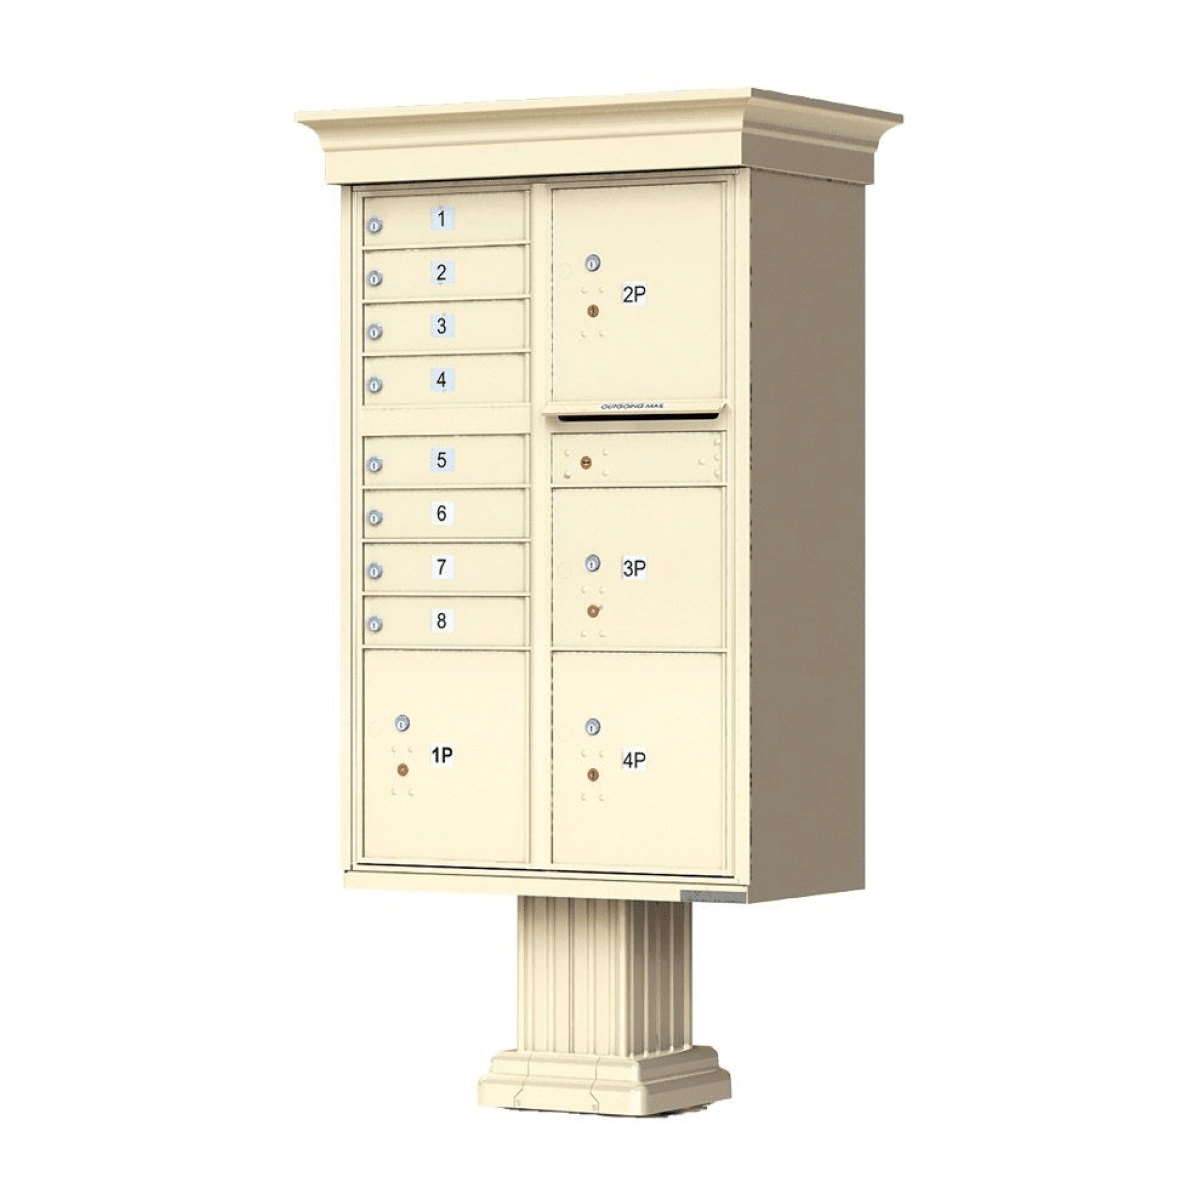 Florence CBU Cluster Mailbox – Vogue Classic Kit, 8 Tenant Doors, 4 Parcel Lockers Product Image